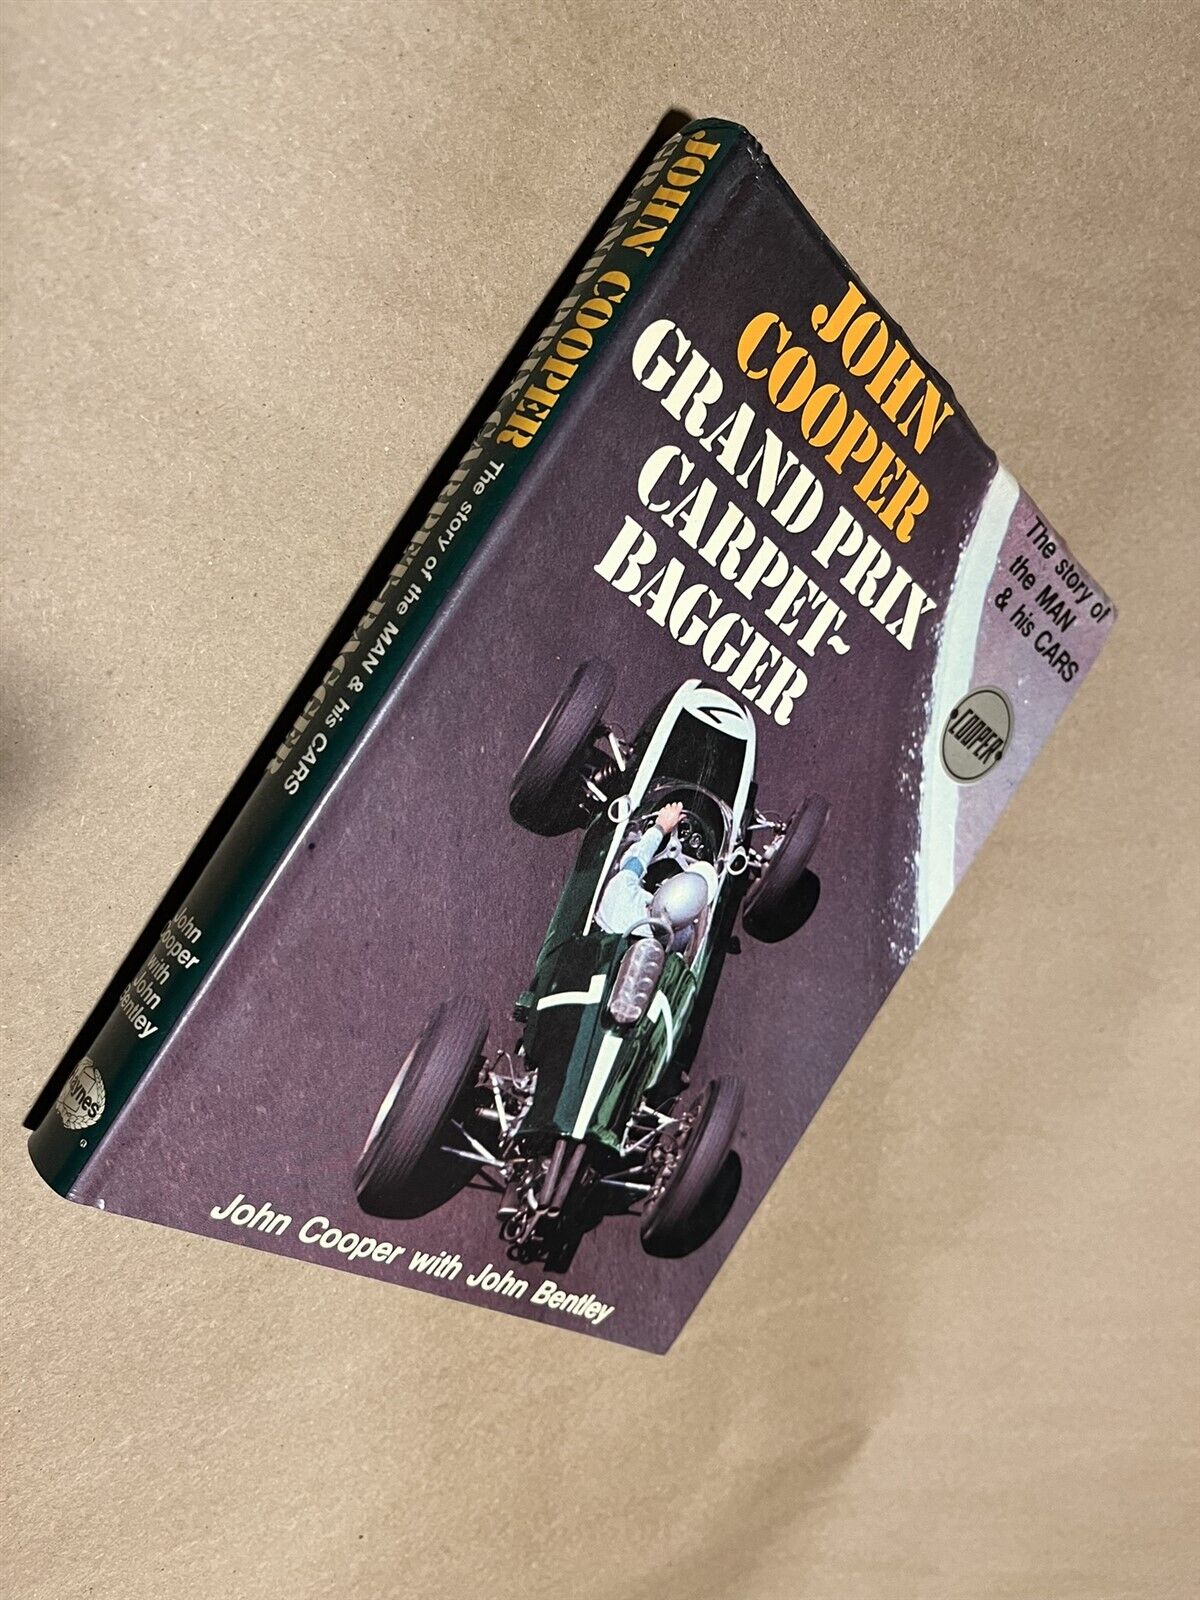 Book Cooper John Cooper Grand Prix Carpet-Bagger by Bentley 1977